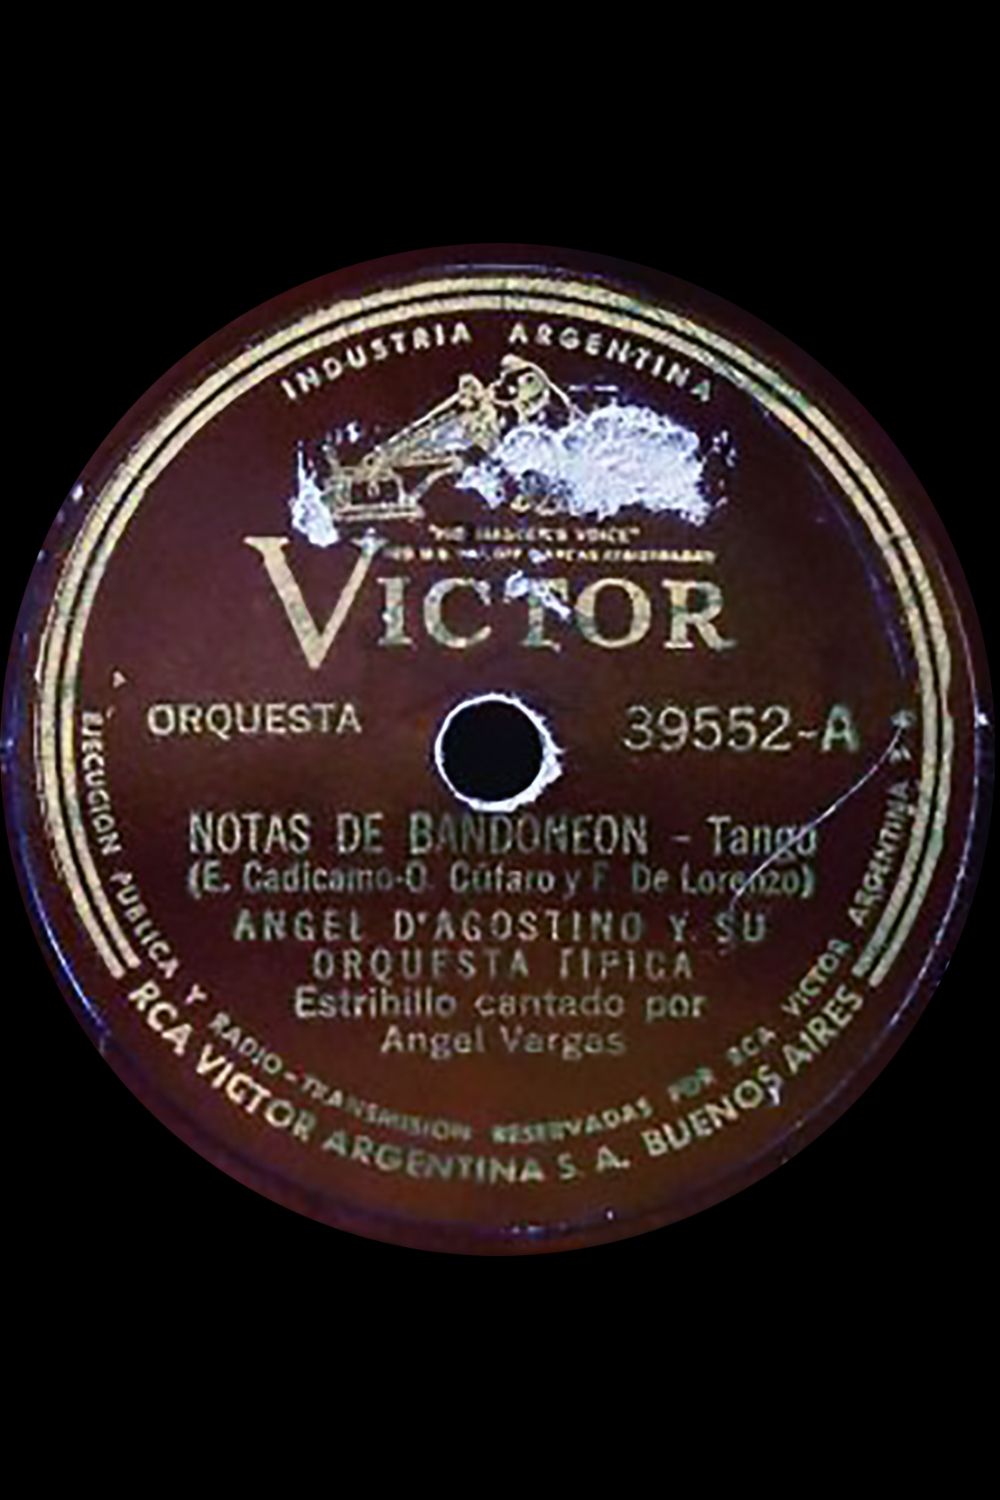 "Notas de bandoneón", Argentine Tango music vinyl disc.